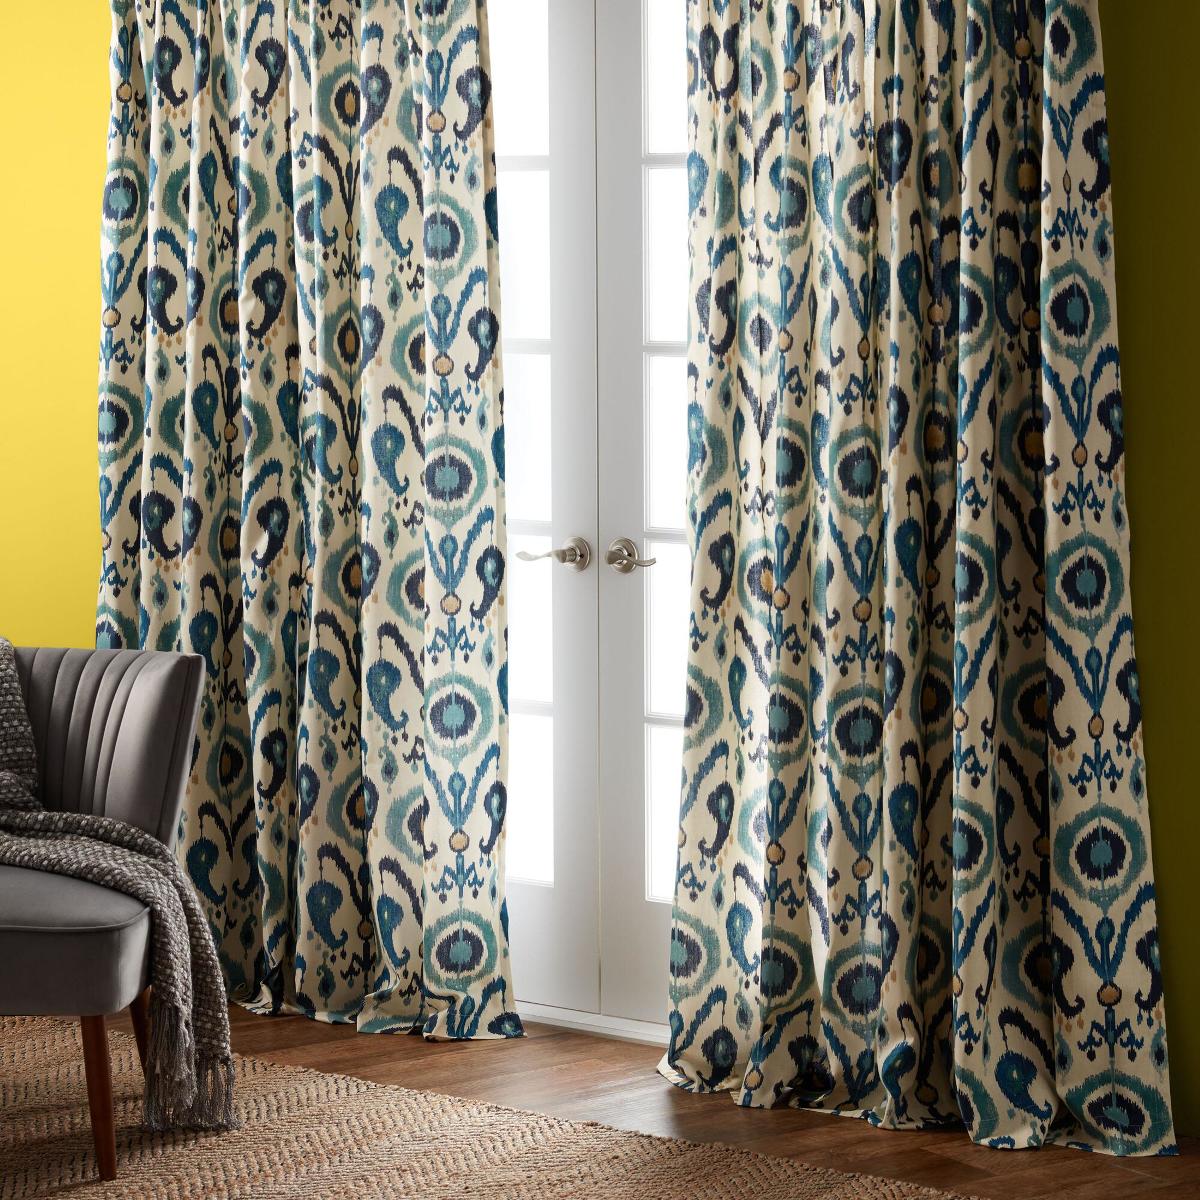 World Market ikat curtains - Laurel Home